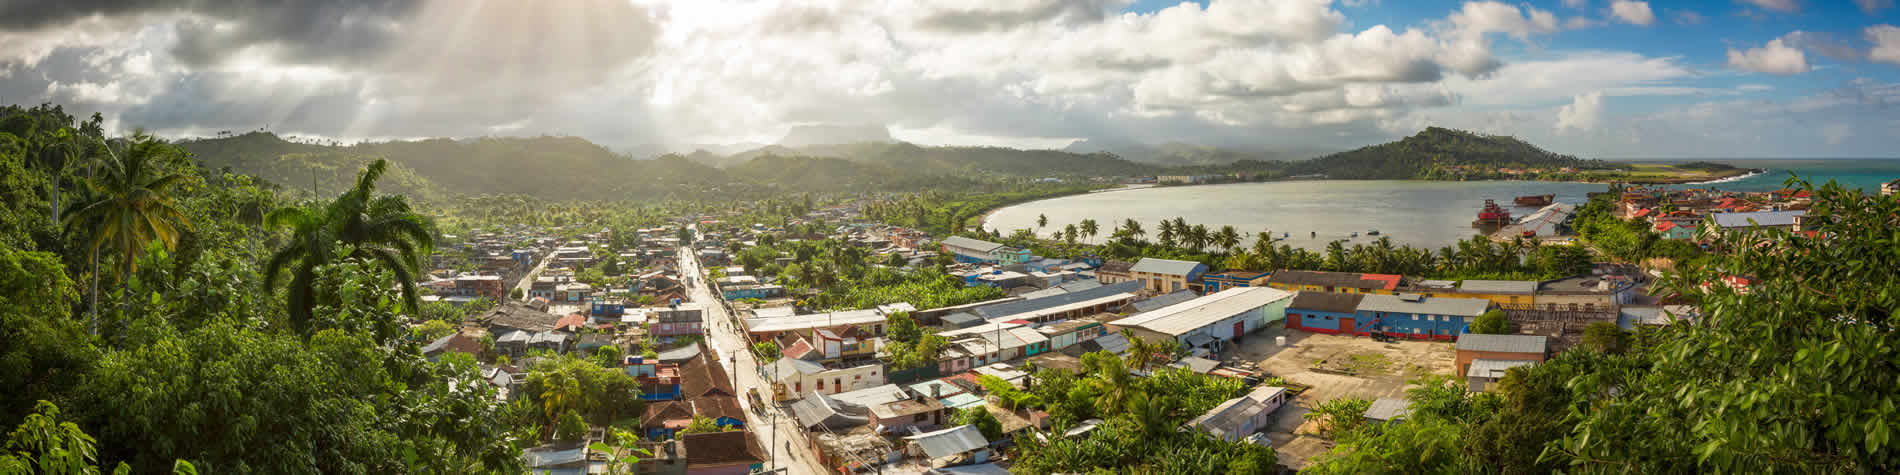 Baracoa town aerial view